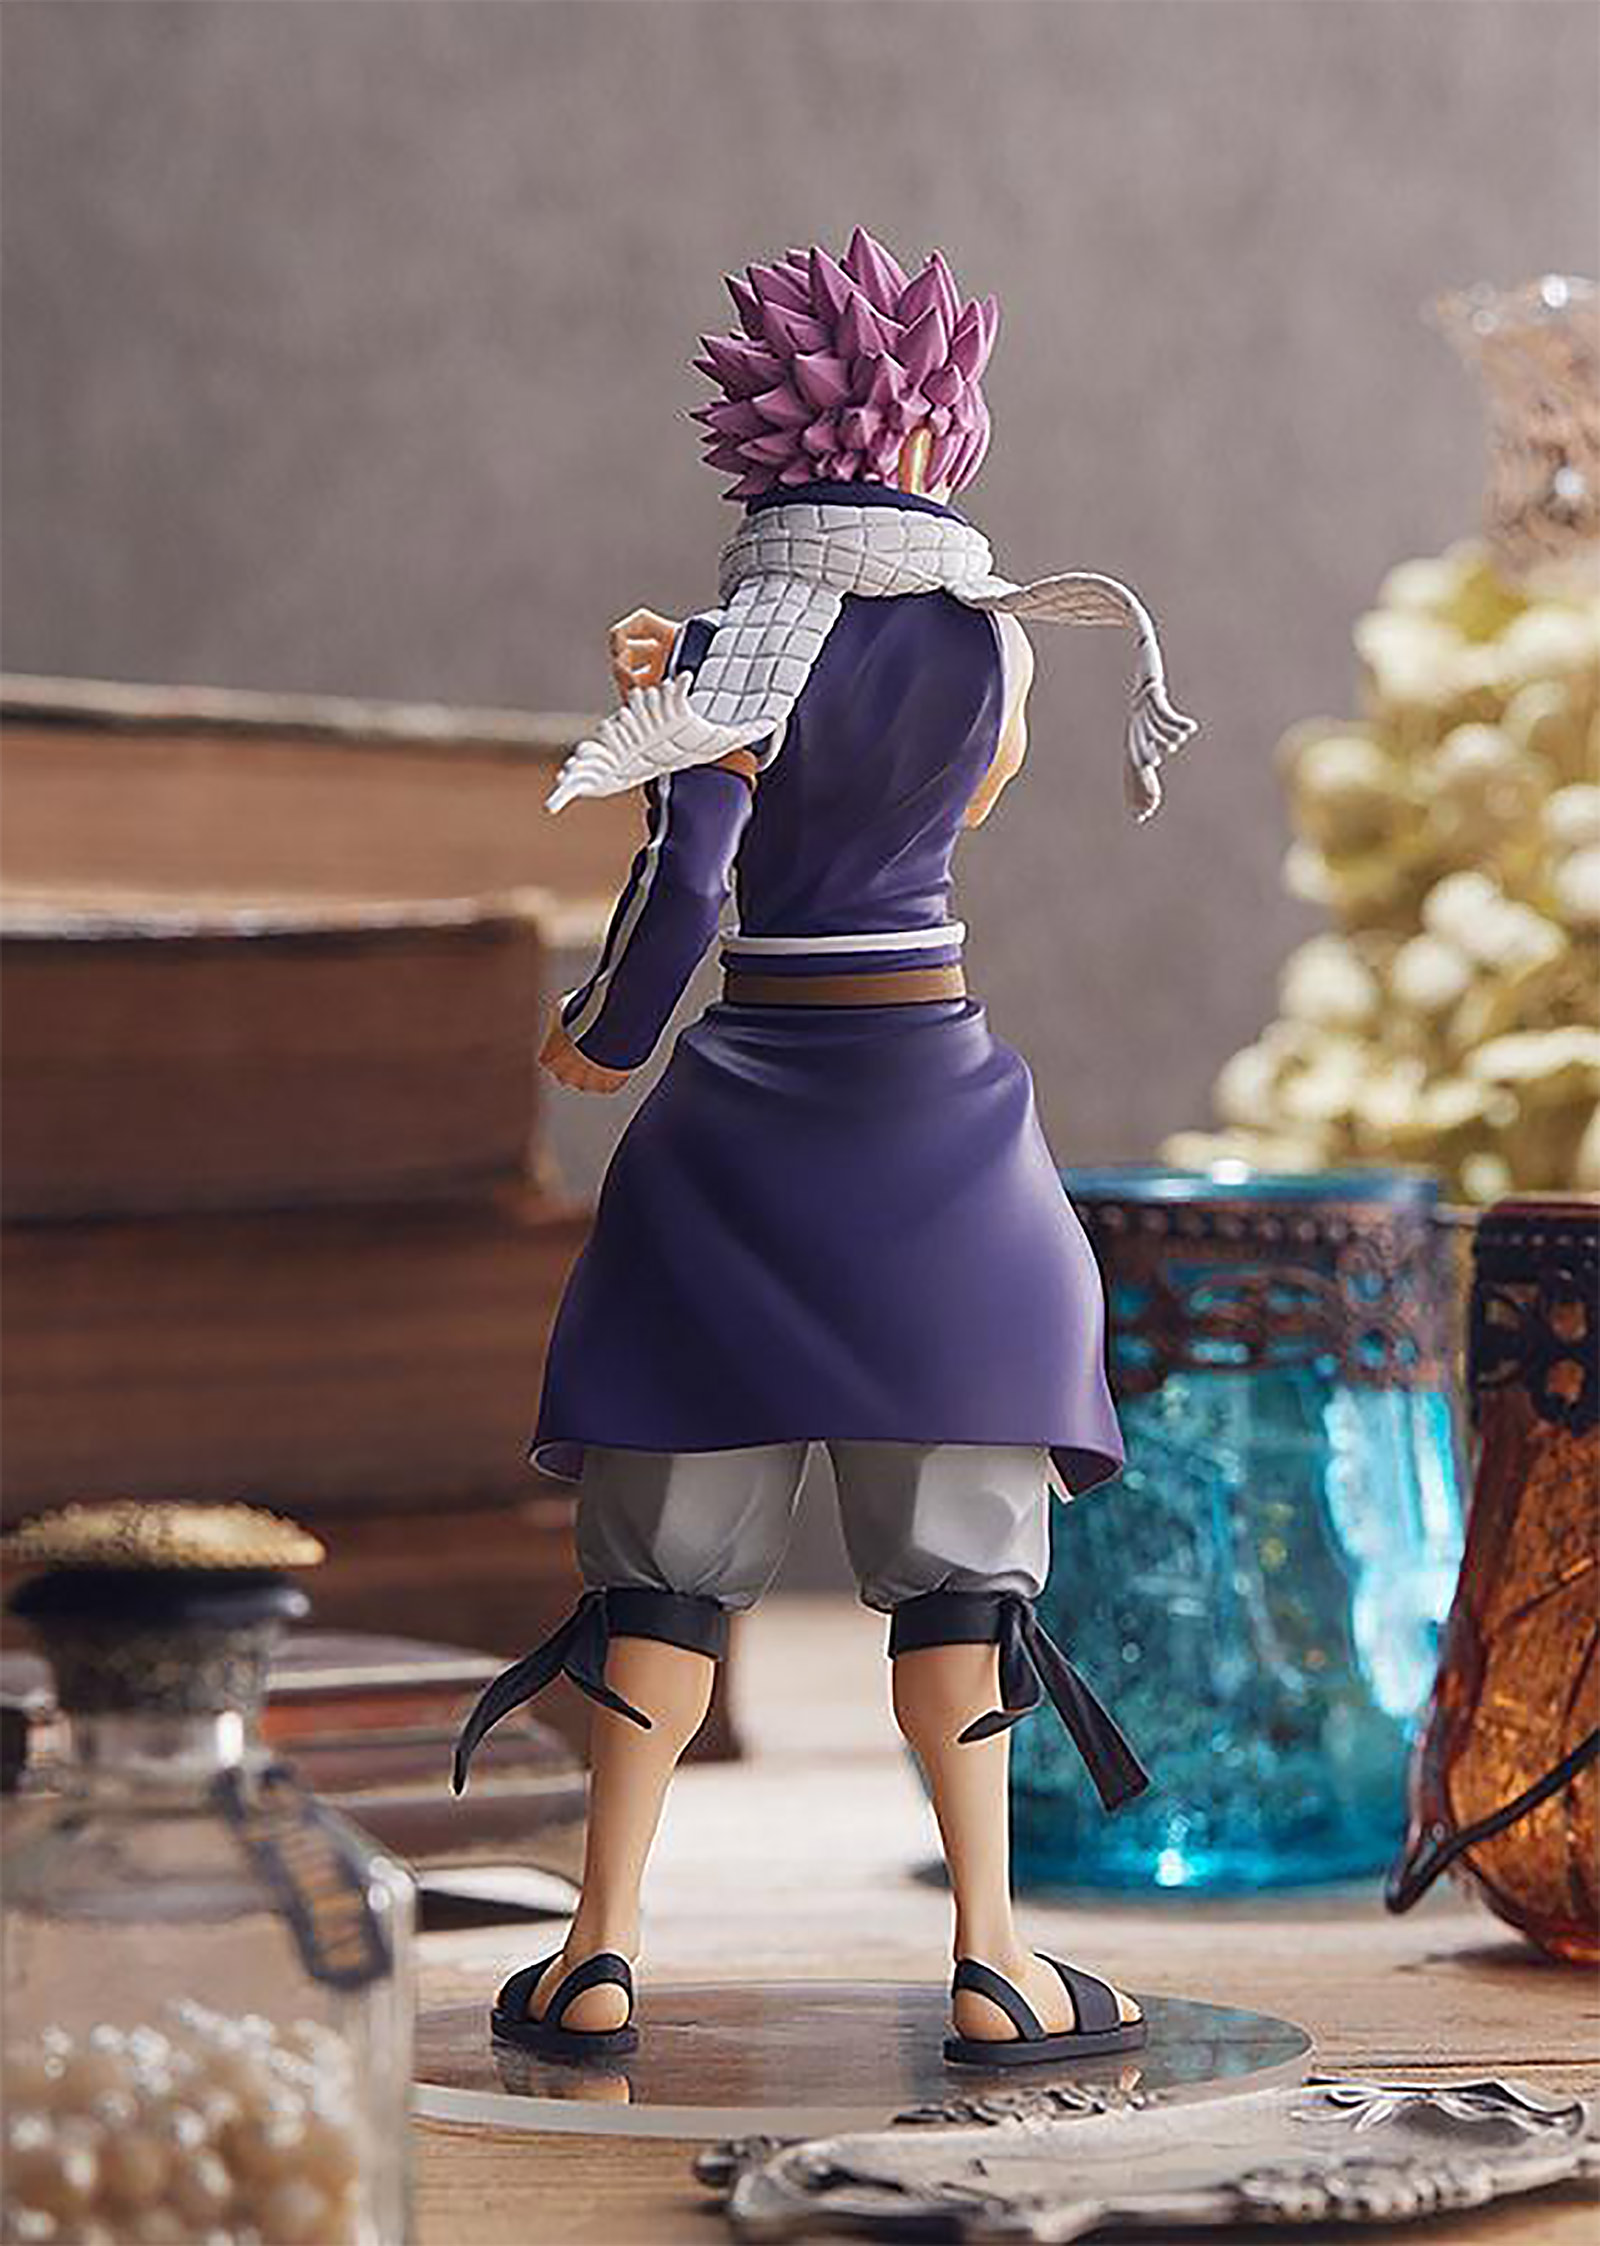 Fairy Tail - Natsu Dragneel figure